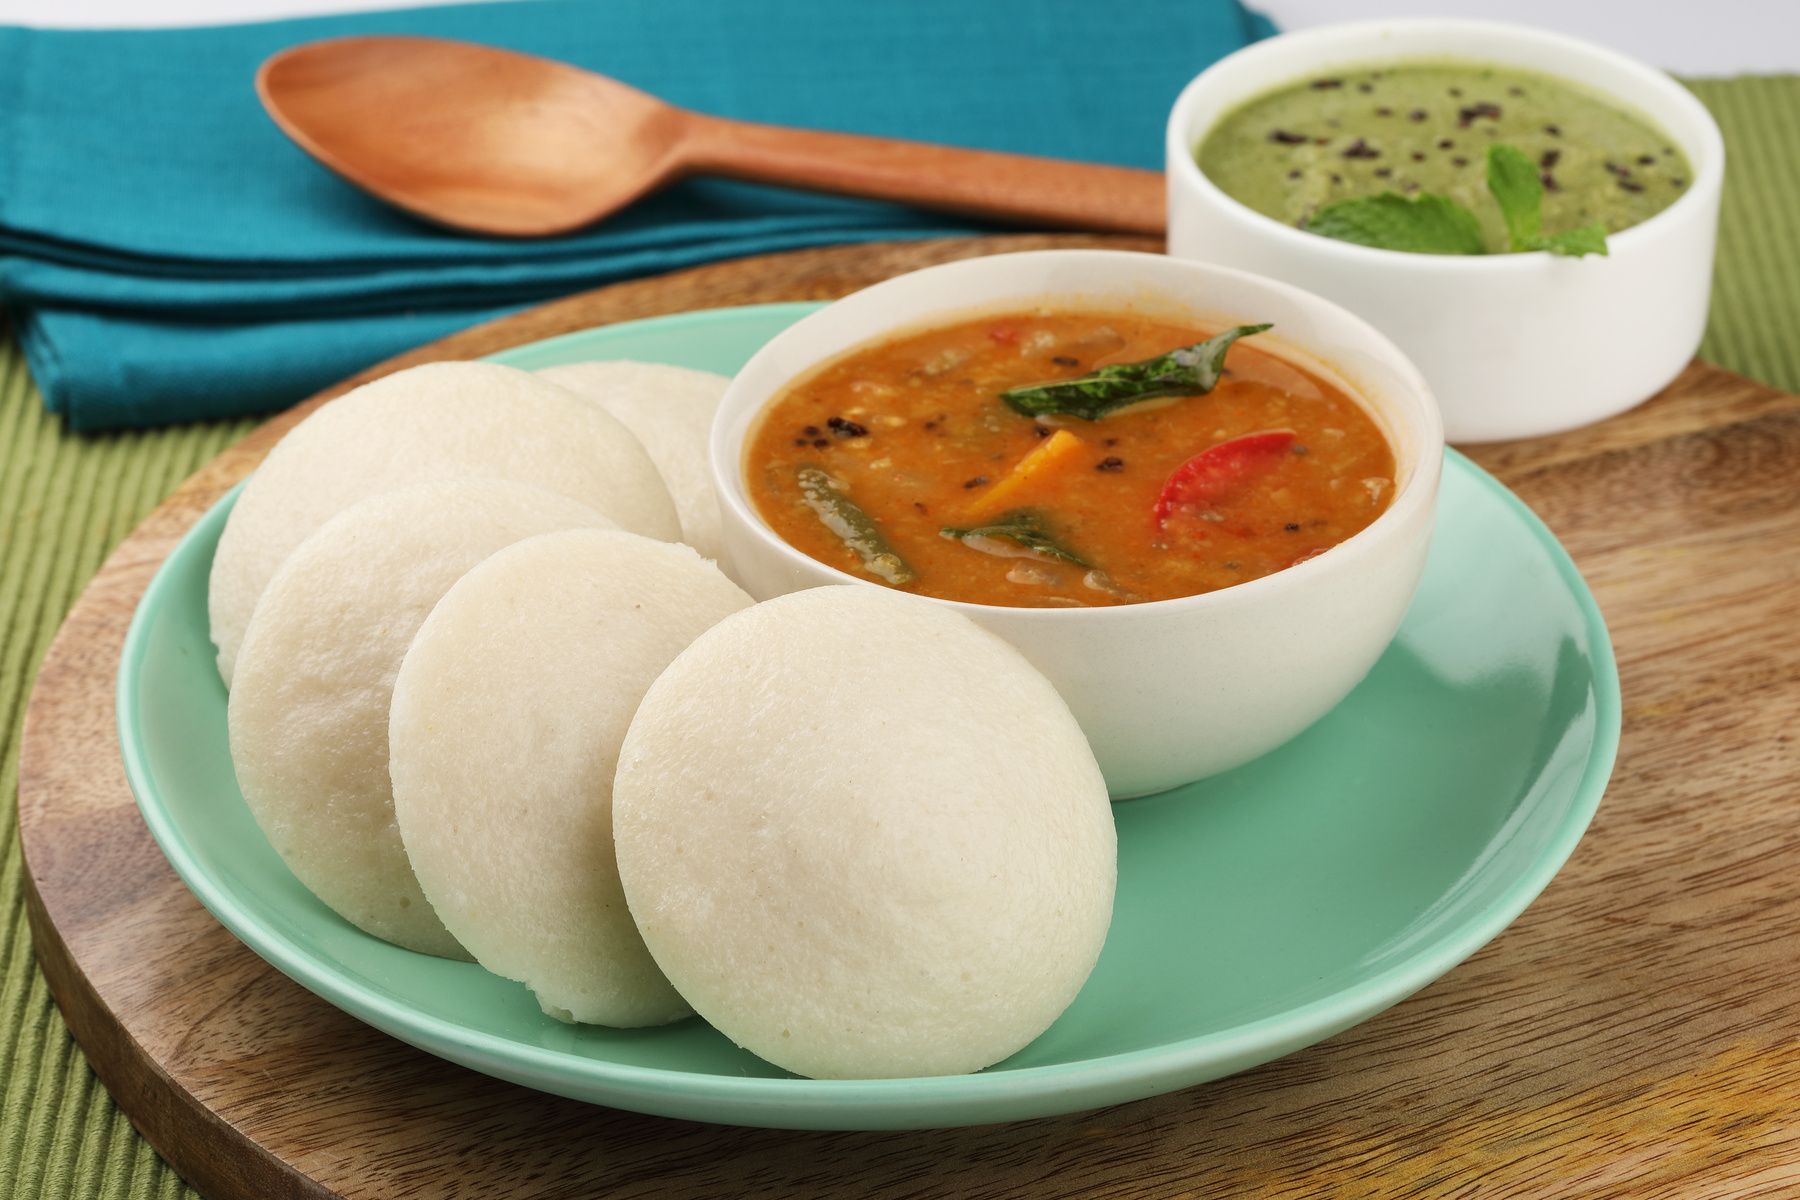 Idli sambhar - traditional South Indian dish served on a plate with vibrant, flavorful sambhar gravy.